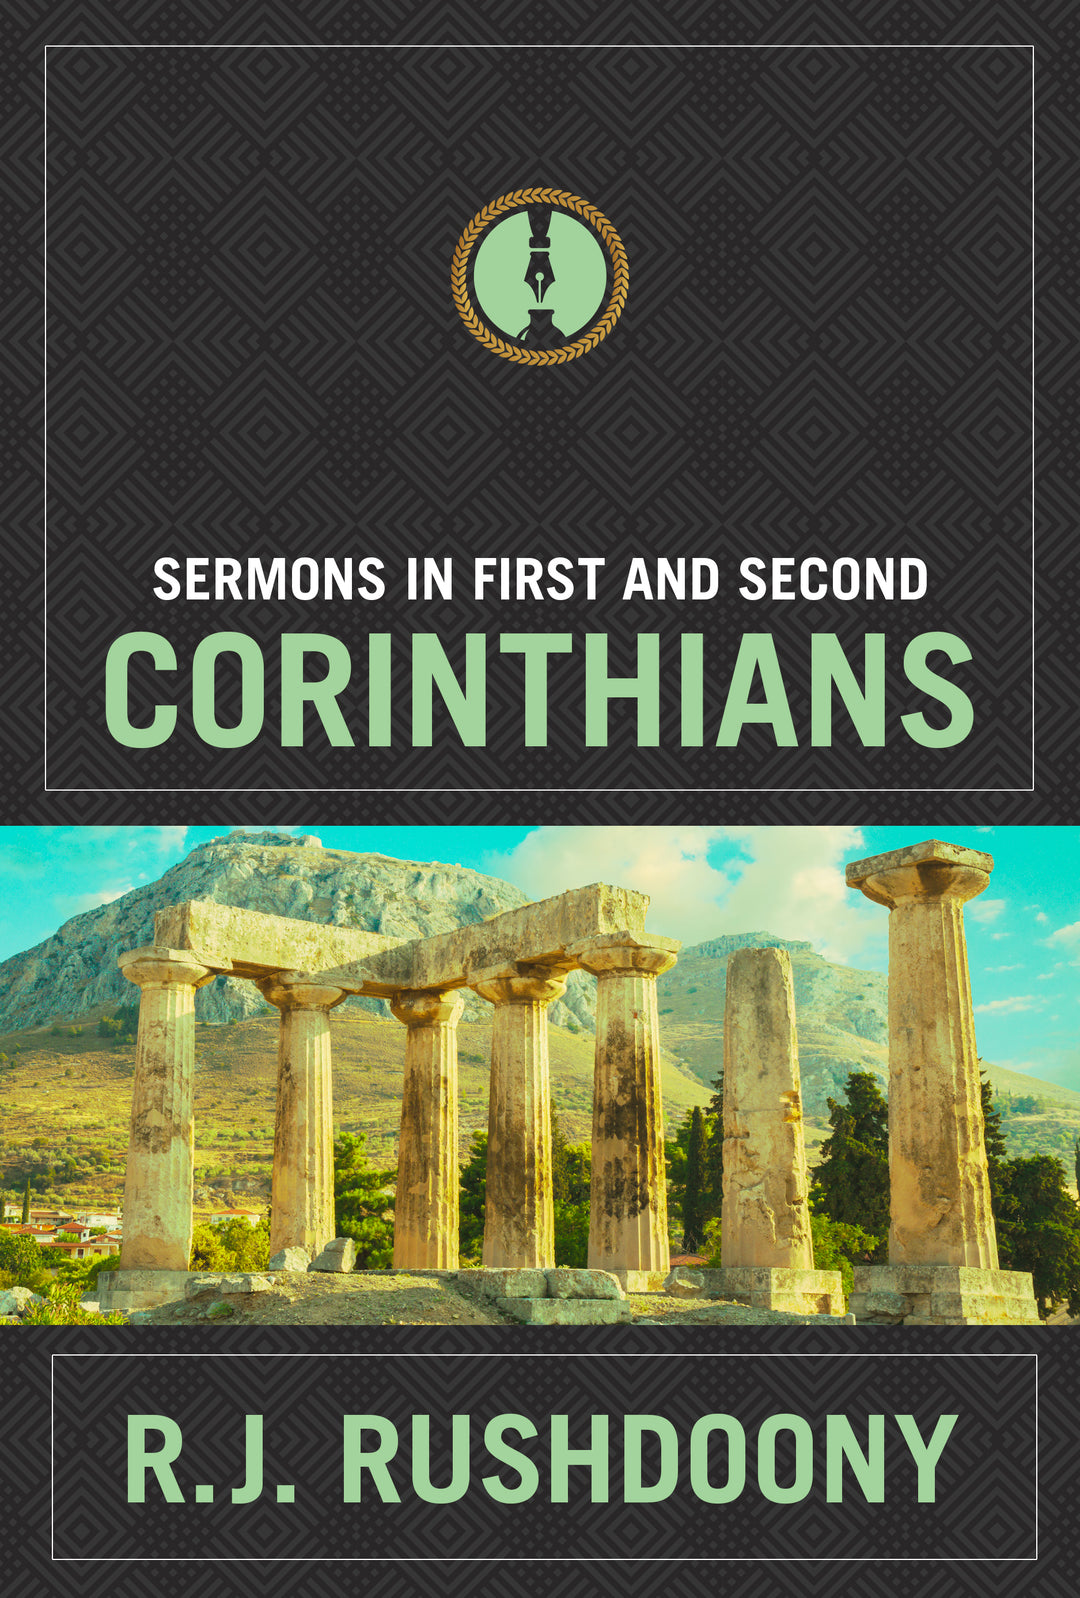 Sermons in 1 & 2 Corinthians